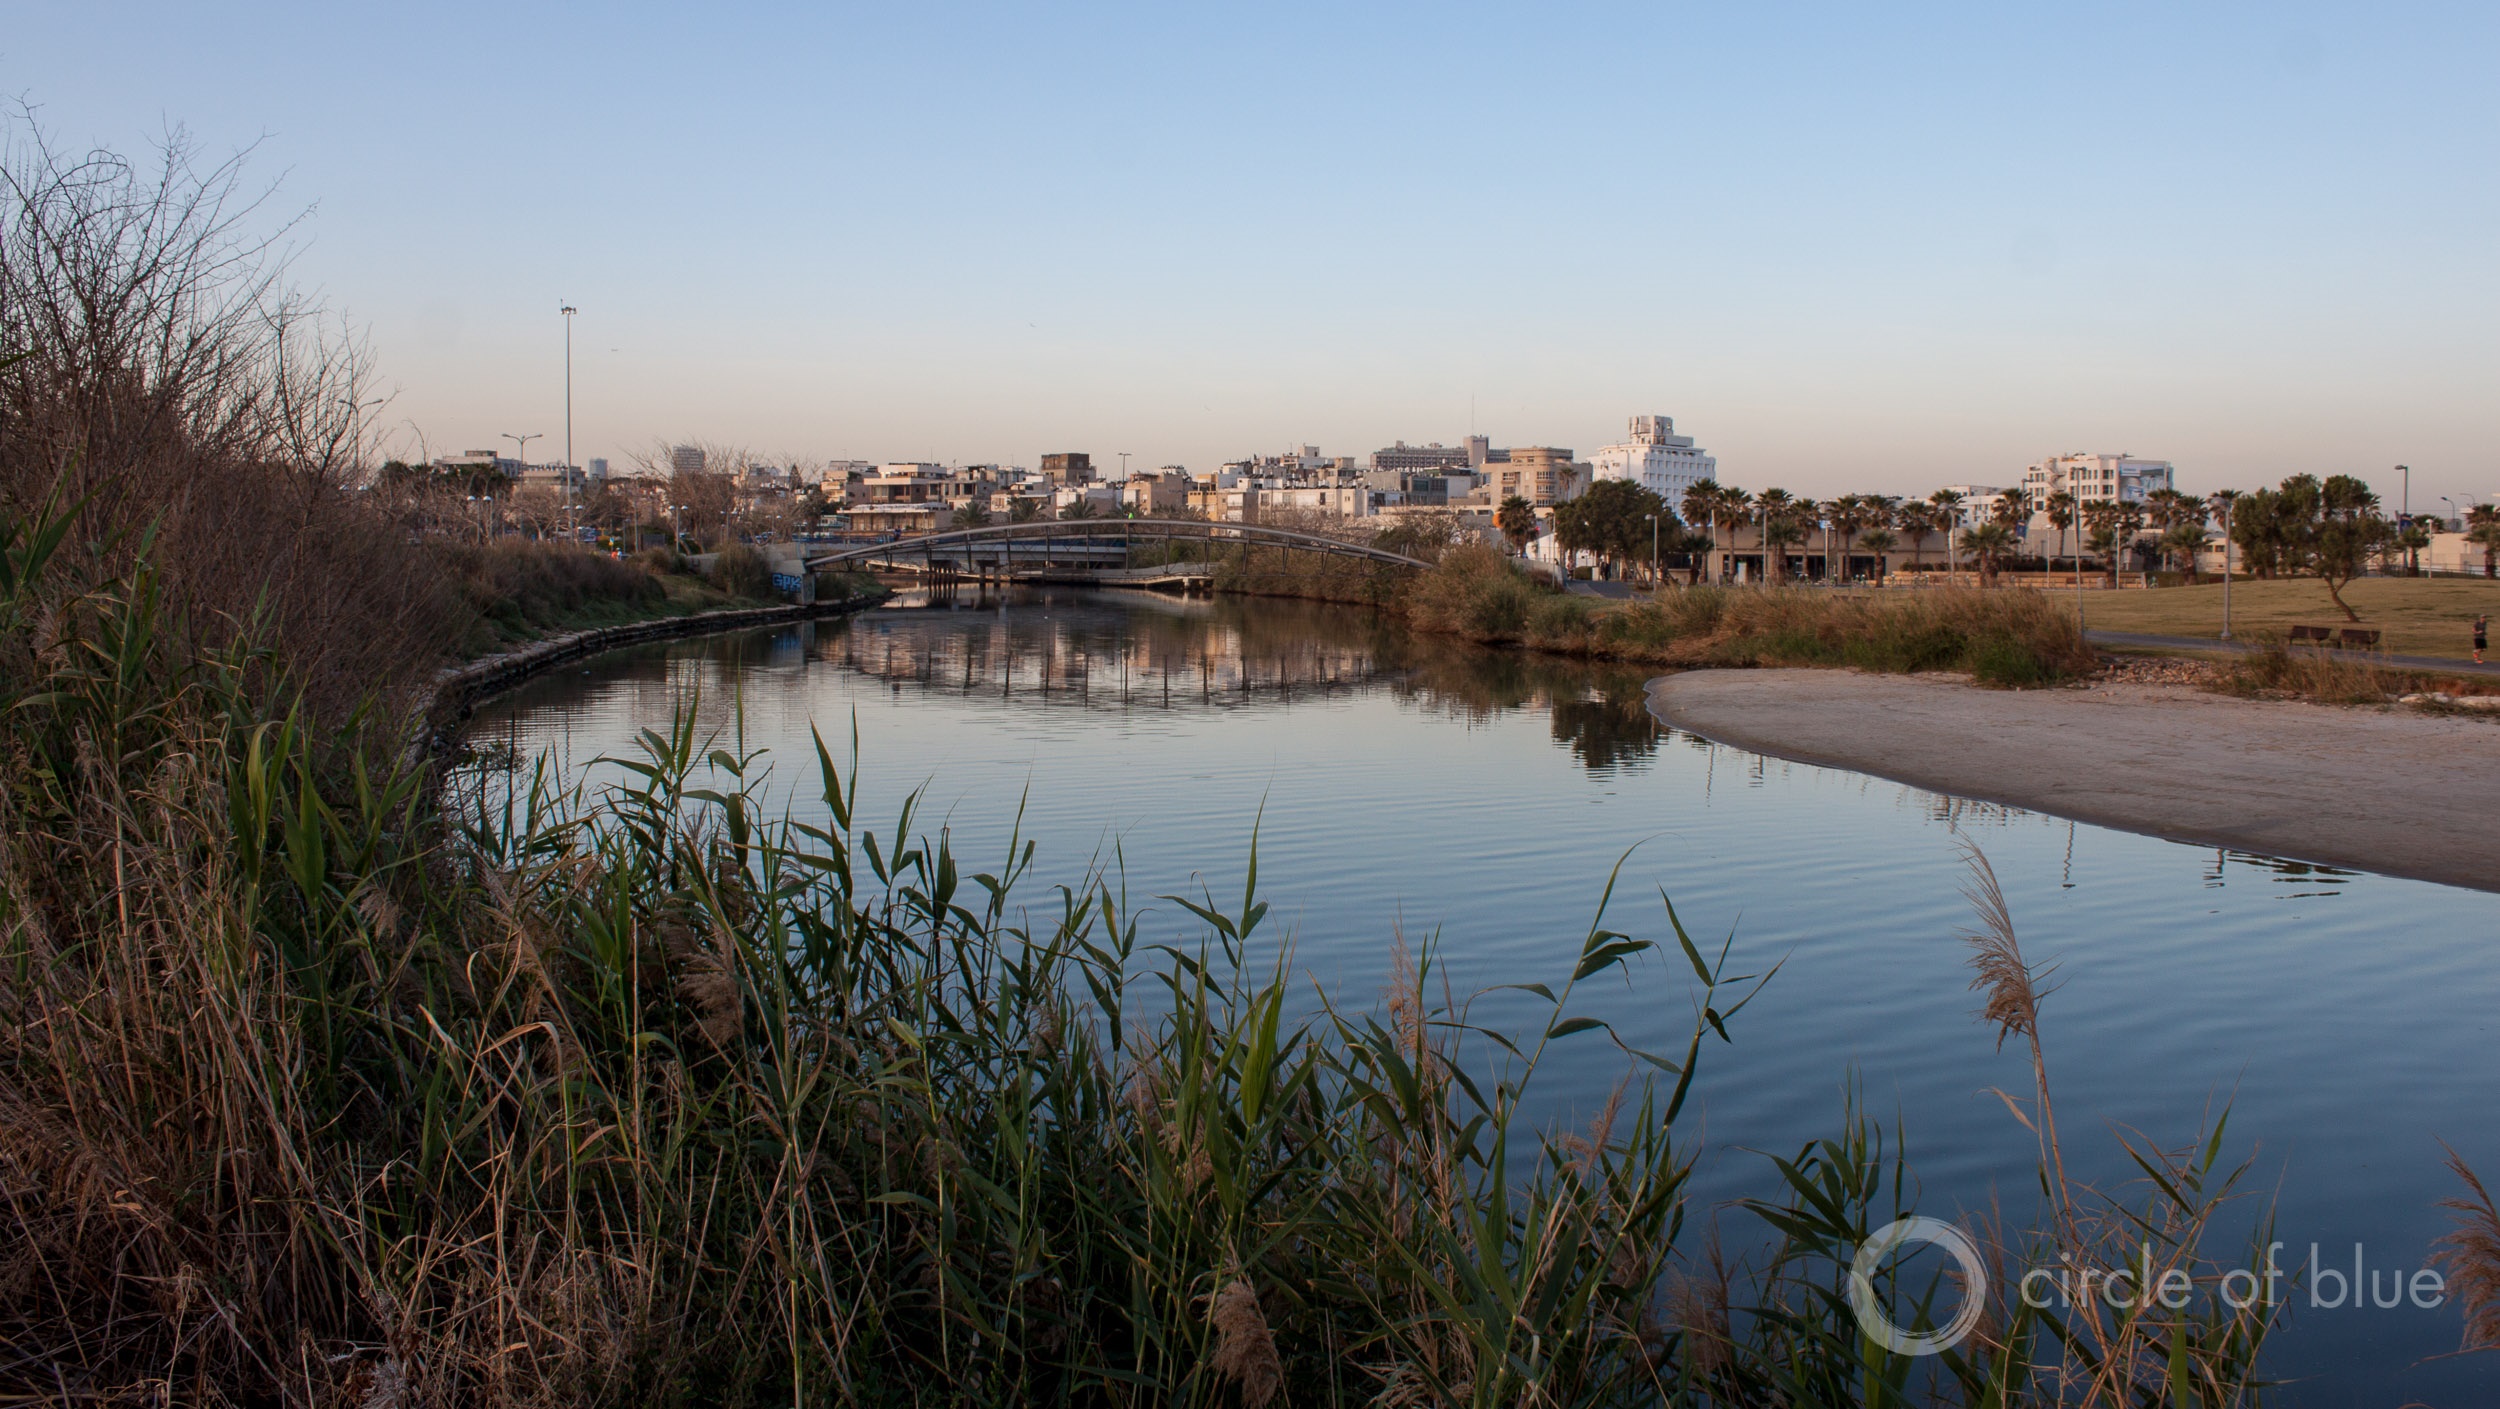 The Yarkon River, a restoration focus in recent years, flows through Tel Aviv. Photo © Brett Walton / Circle of Blue